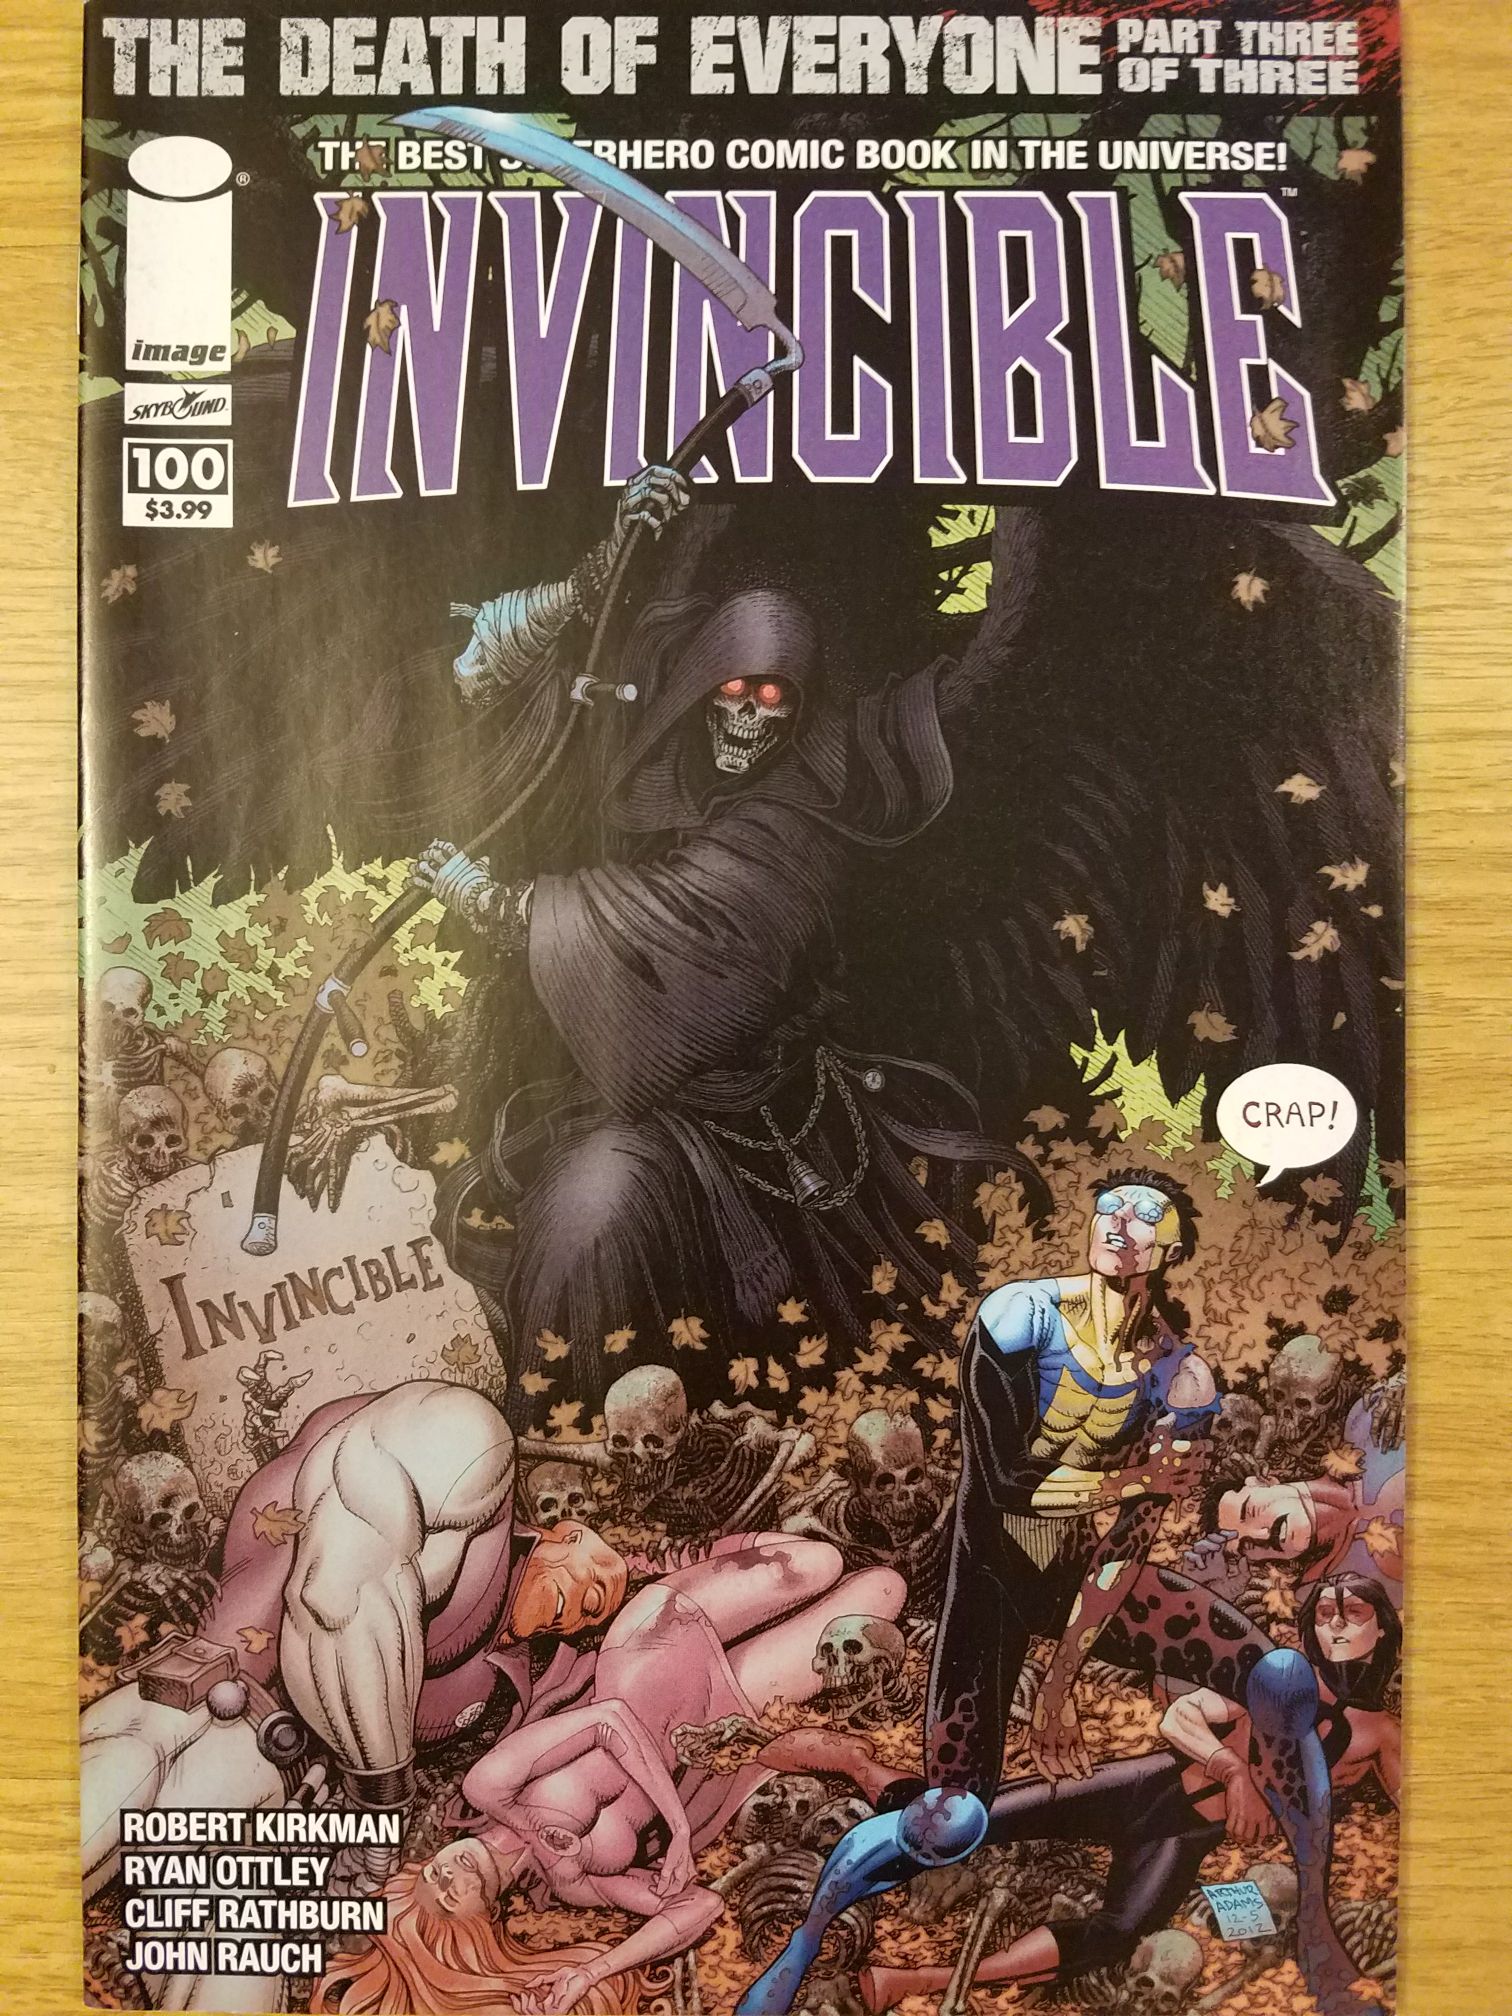 Invincible - Image (100 - Jan 2013) comic book collectible [Barcode 9781582407111] - Main Image 1